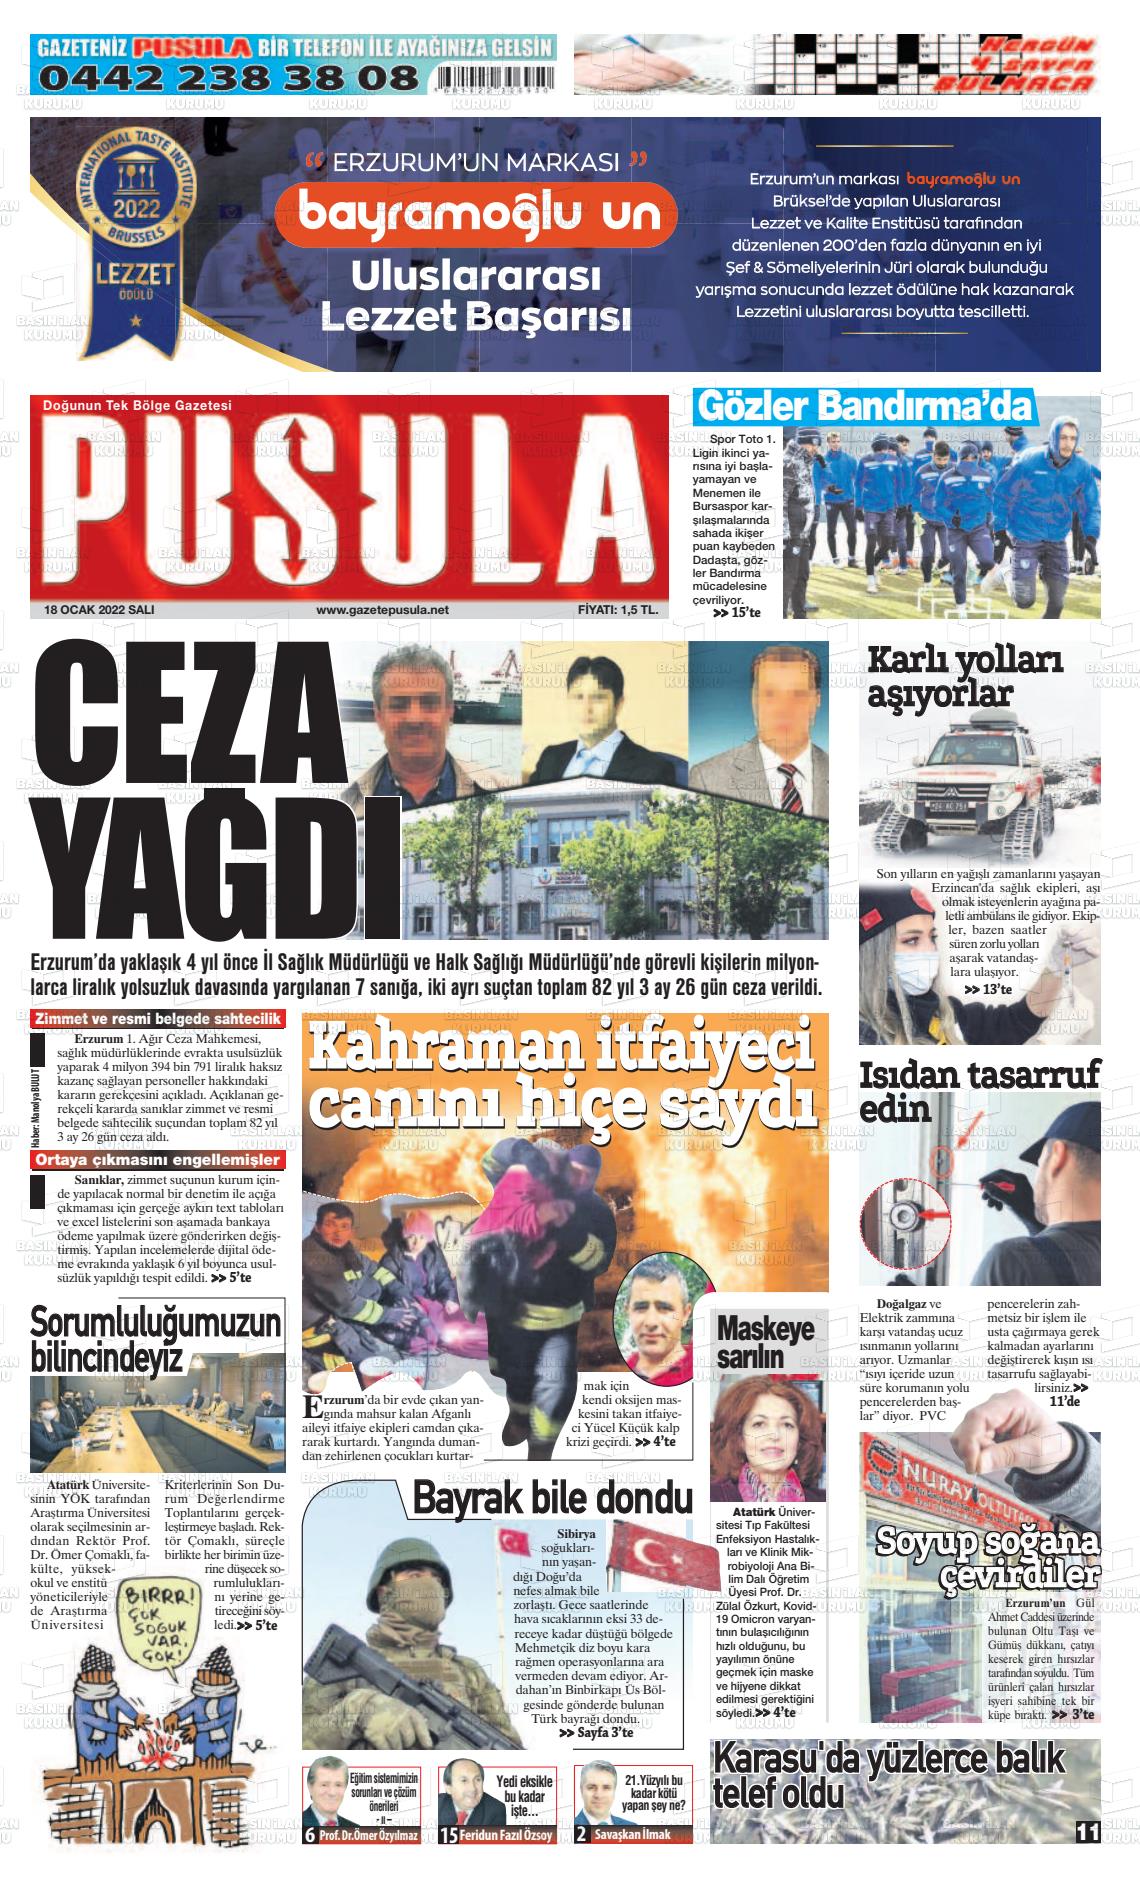 18 Ocak 2022 Erzurum Pusula Gazete Manşeti